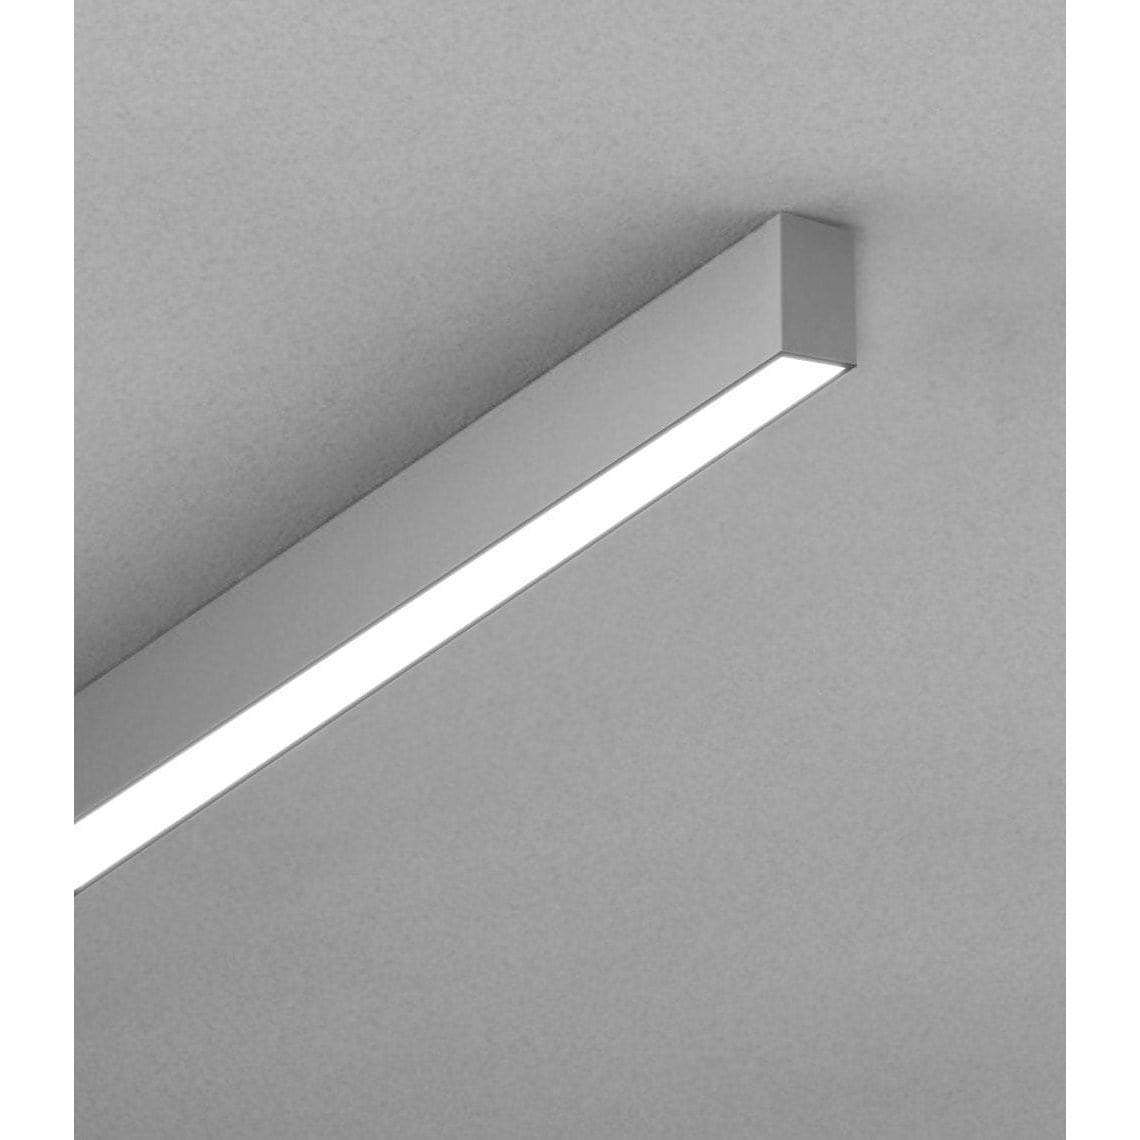 POE Texas Lighting Denton Suspended Linear PoE Lights - Sample 1.3" x 2' Linear Diffuser 2 ft, 5000K (Surface)